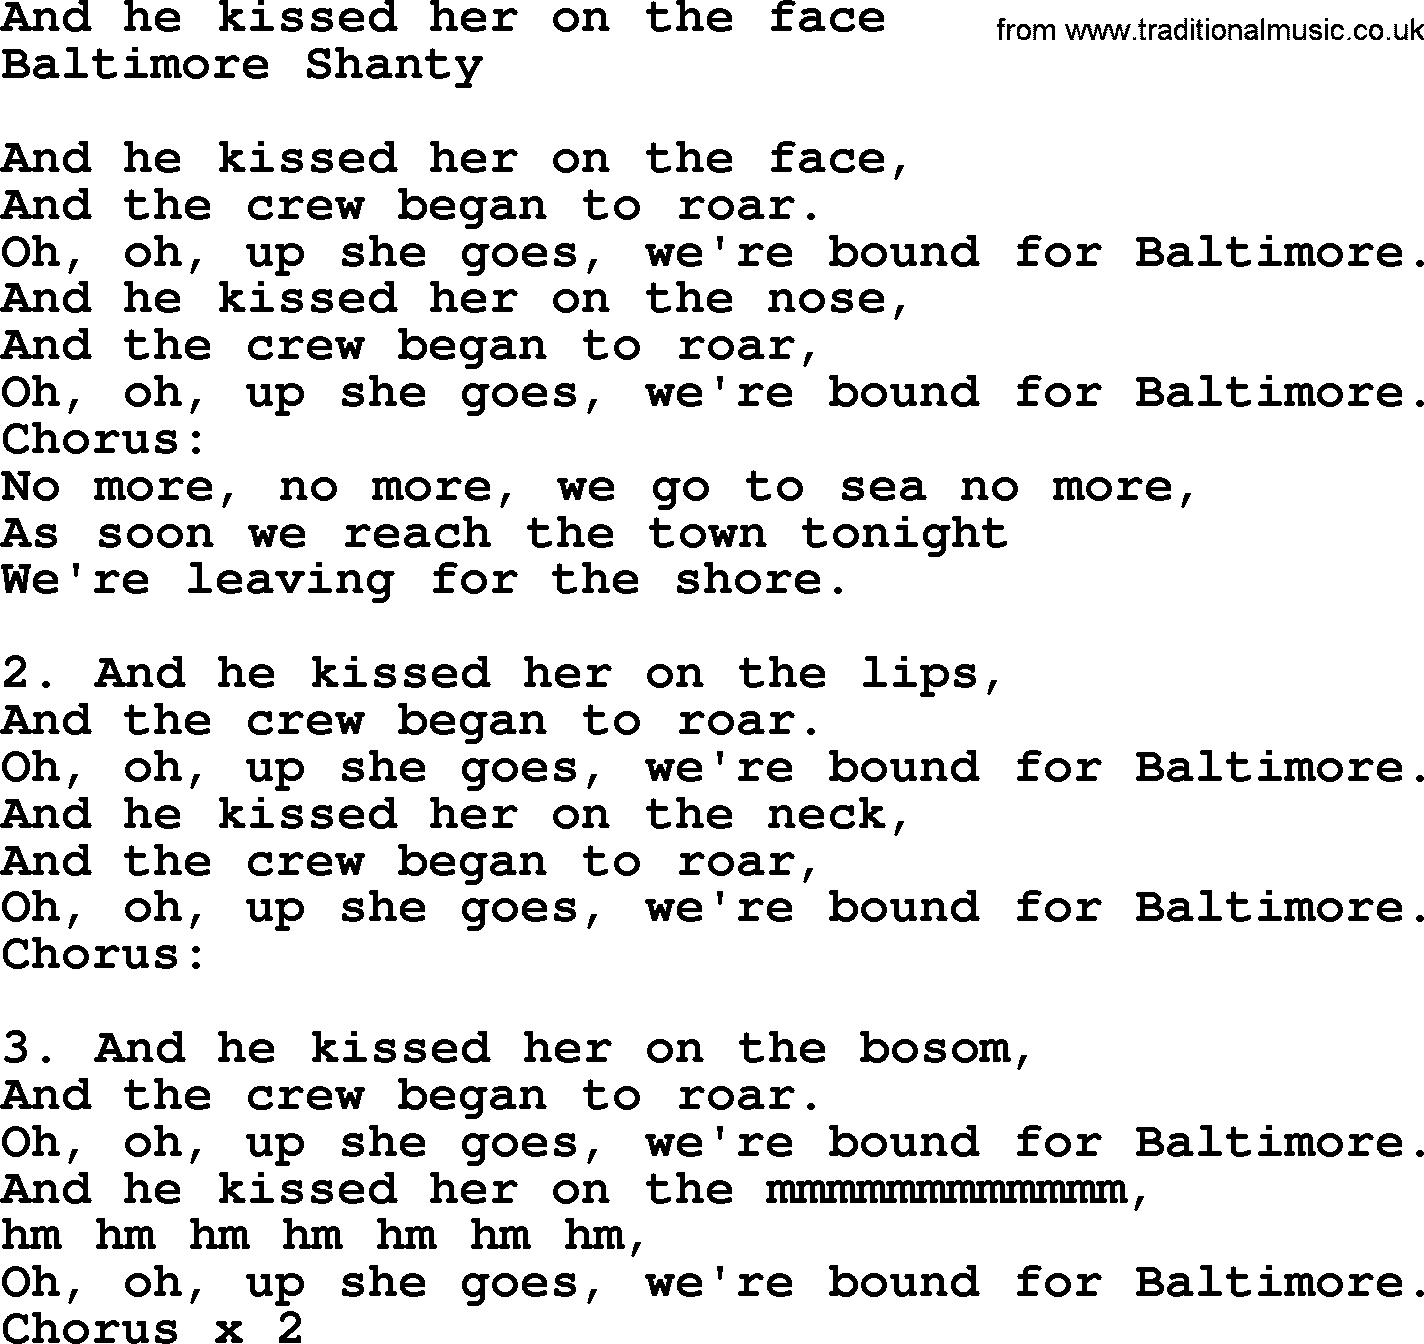 Sea shanty medley lyrics